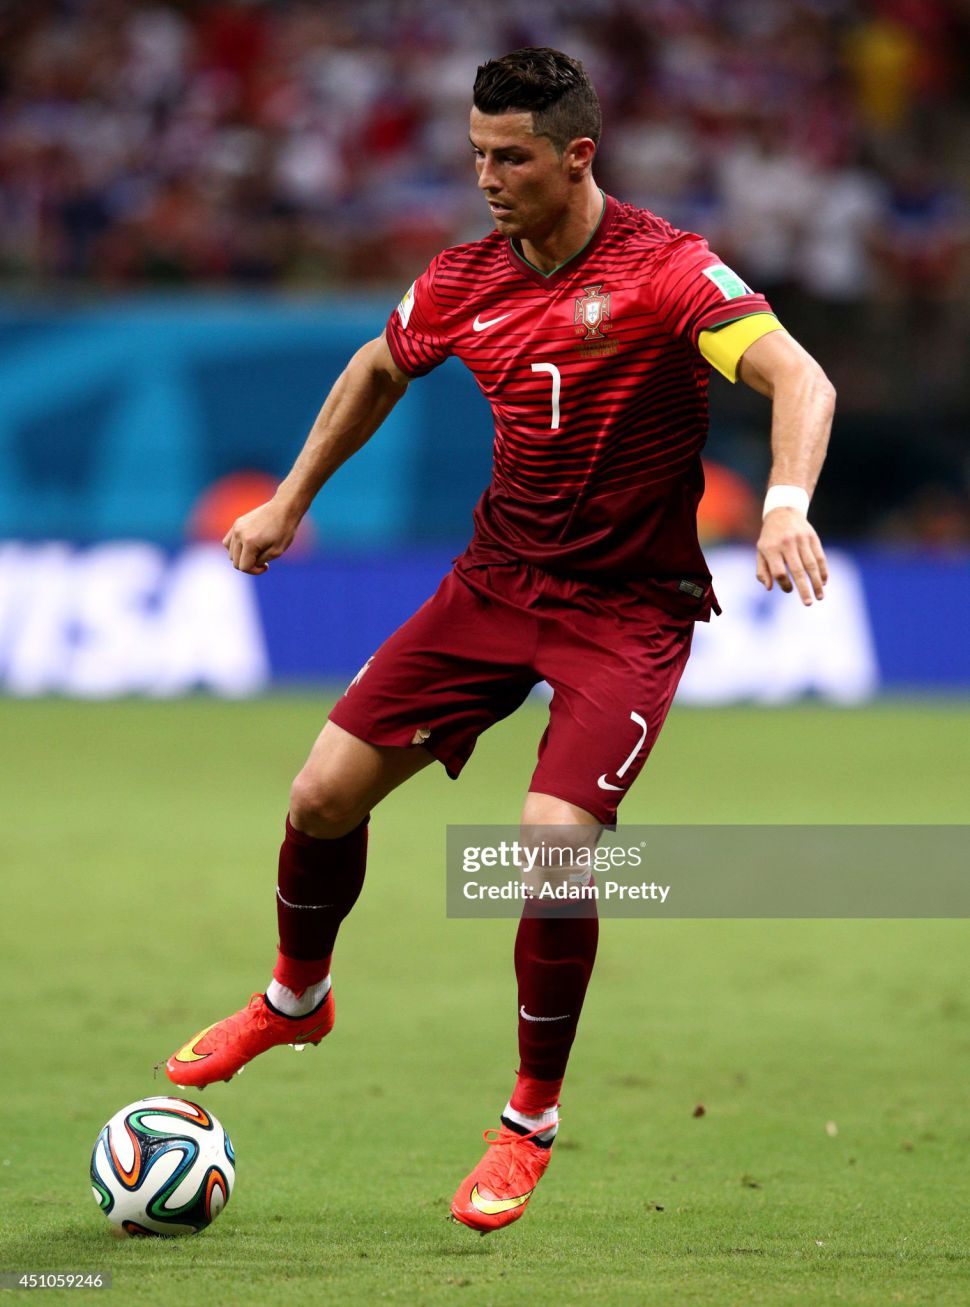 Áo Ronaldo Portugal 2014 2015 2016 home shirt jersey red 577986 Nike